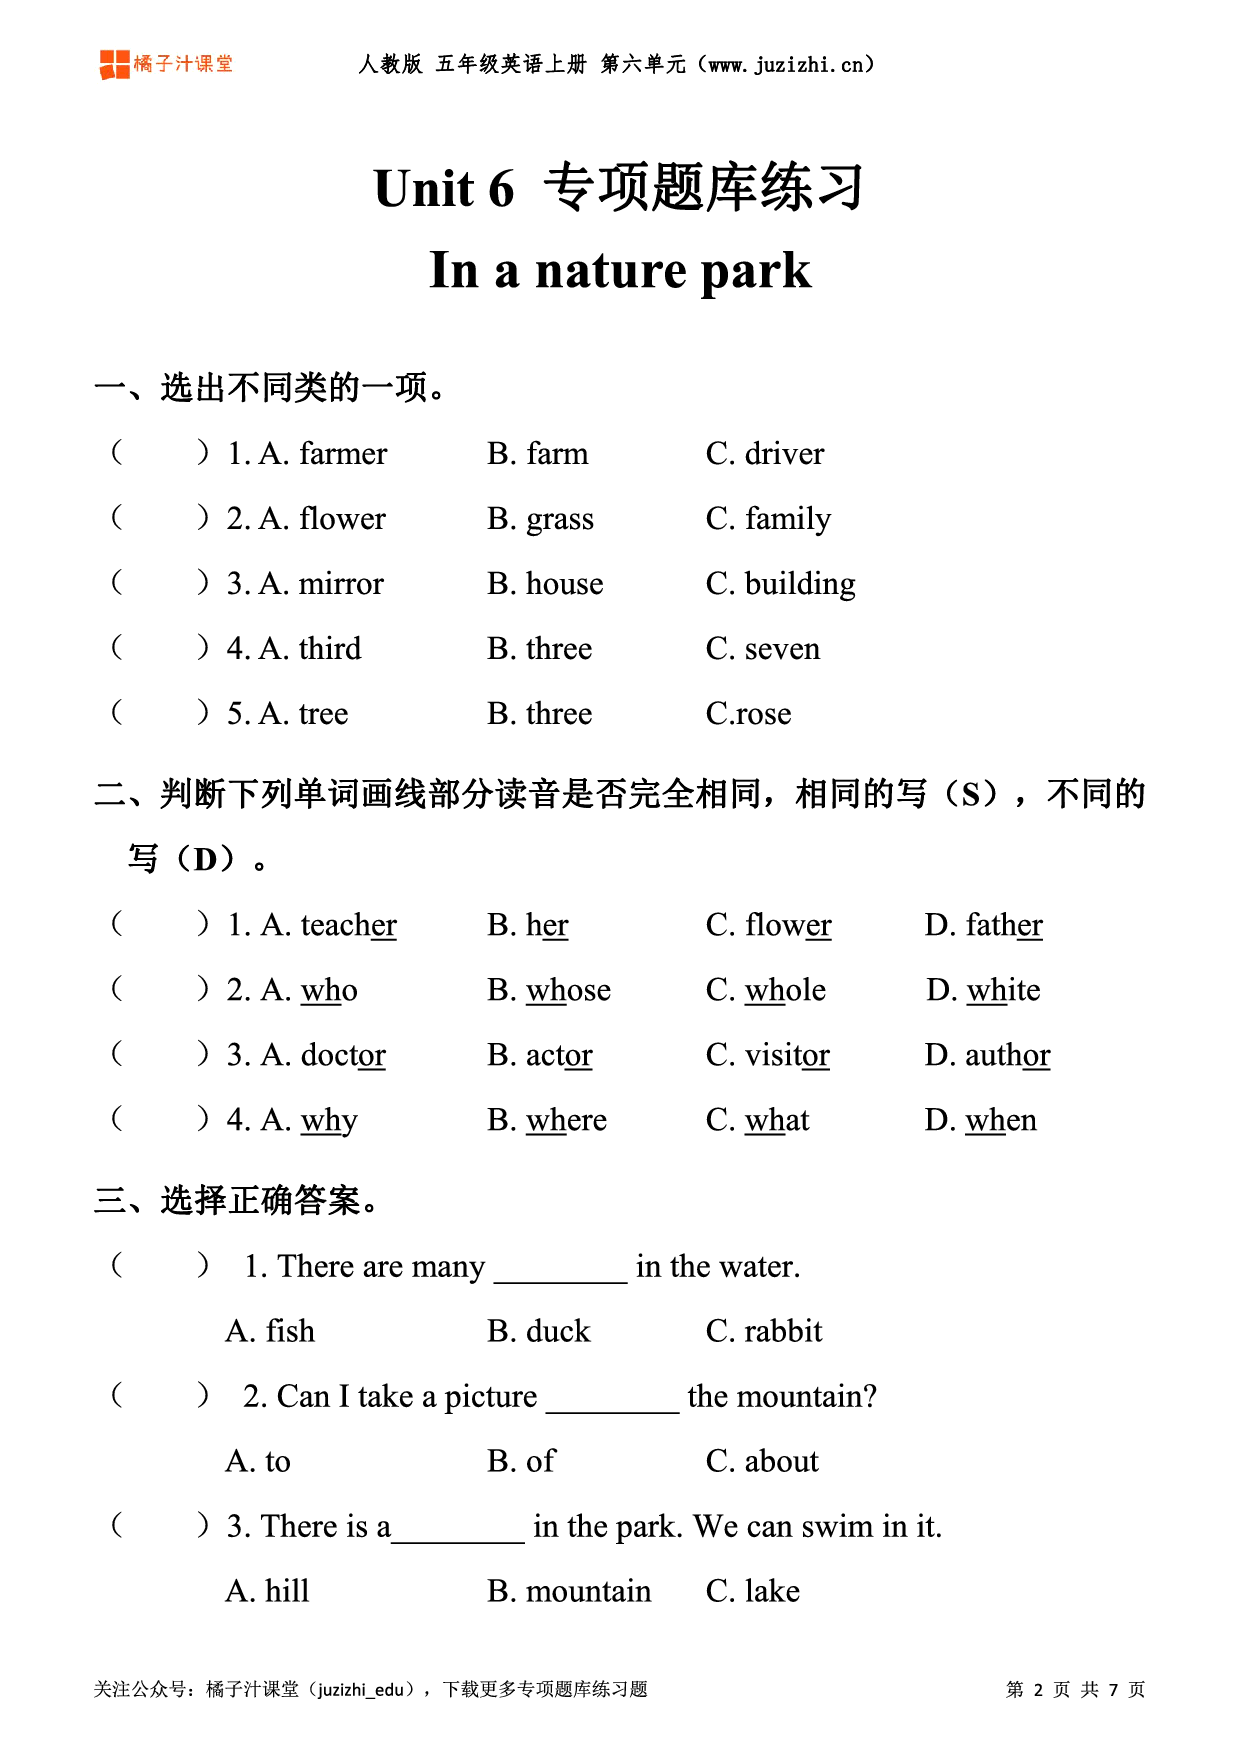 【PEP英语】五年级上册Unit 6《In a nature park》专项题库练习